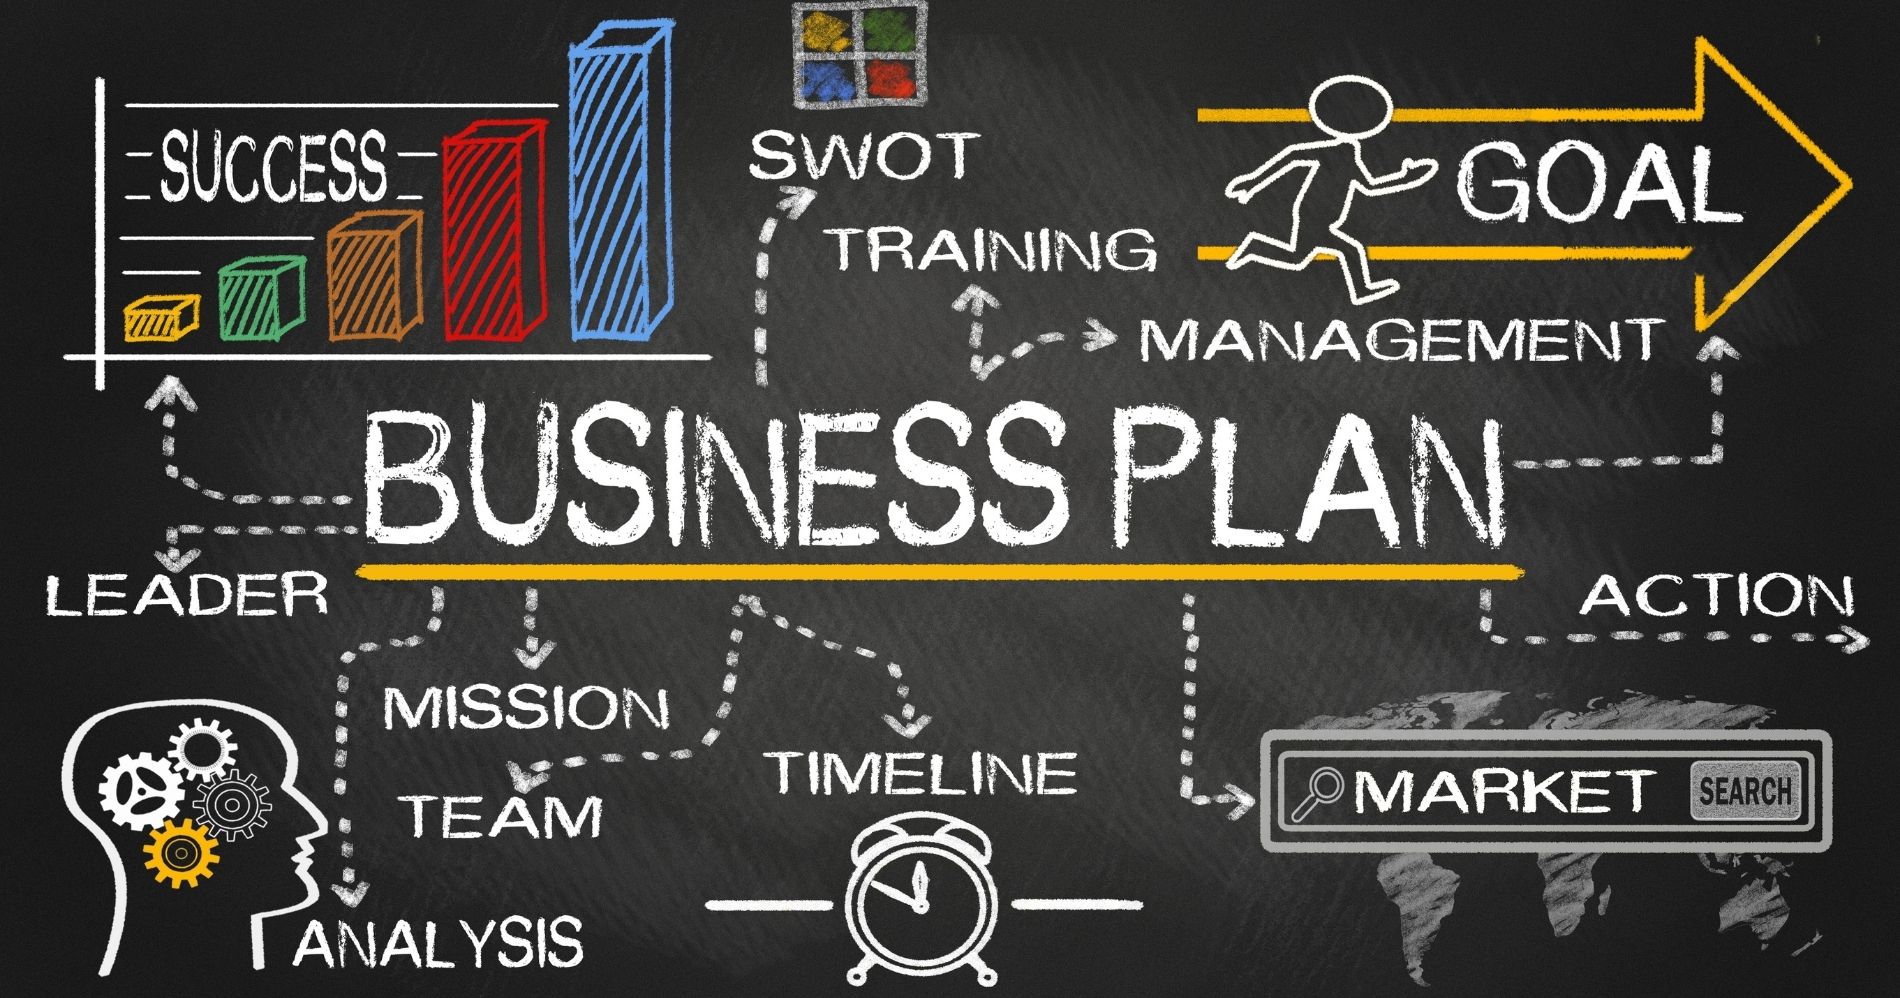 Template Business Plan Sederhana ilustrasi Bisnis Muda - Image: Canva